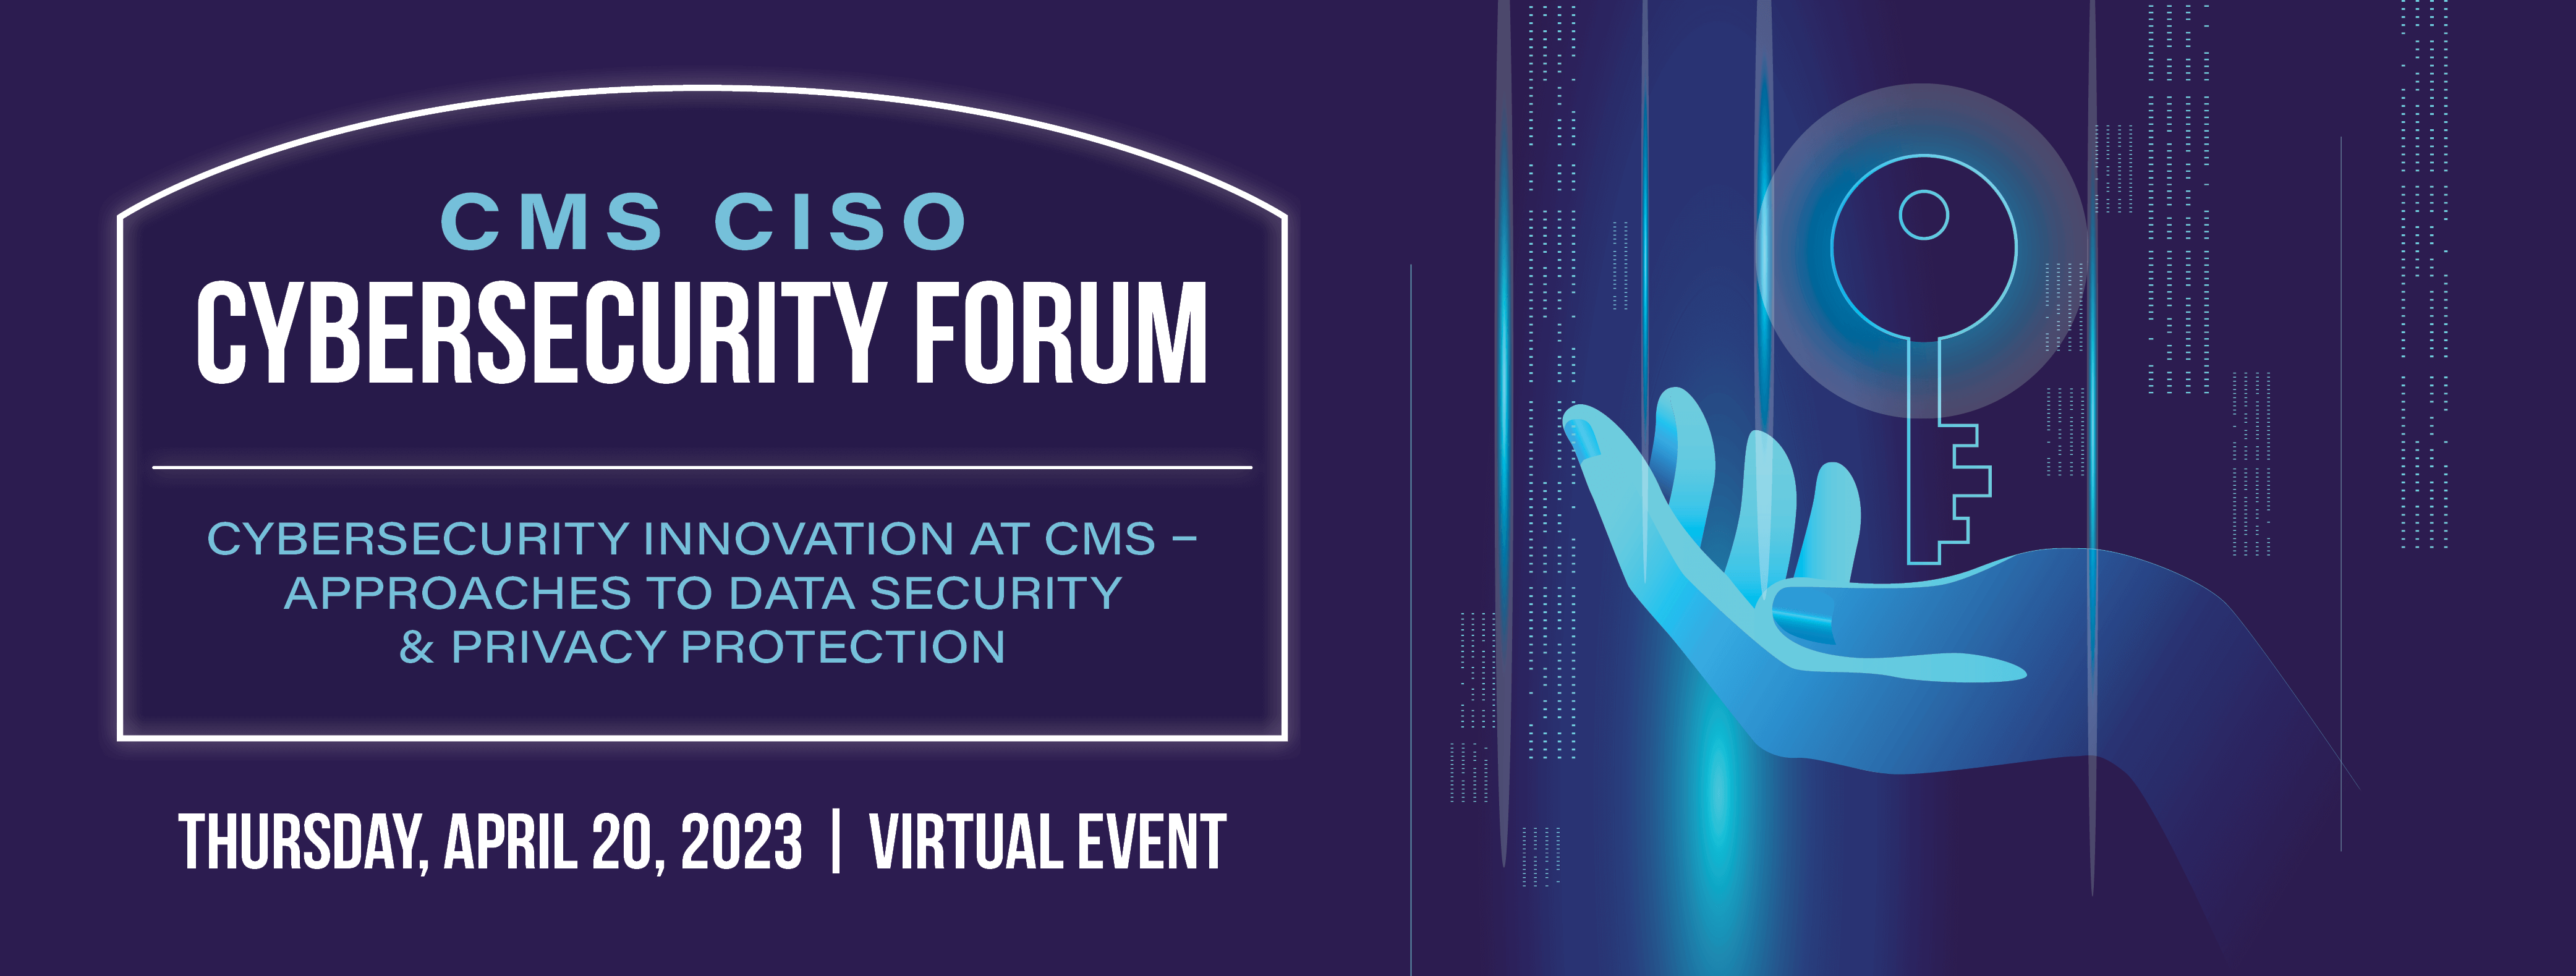 CMS CISO Cybersecurity Forum